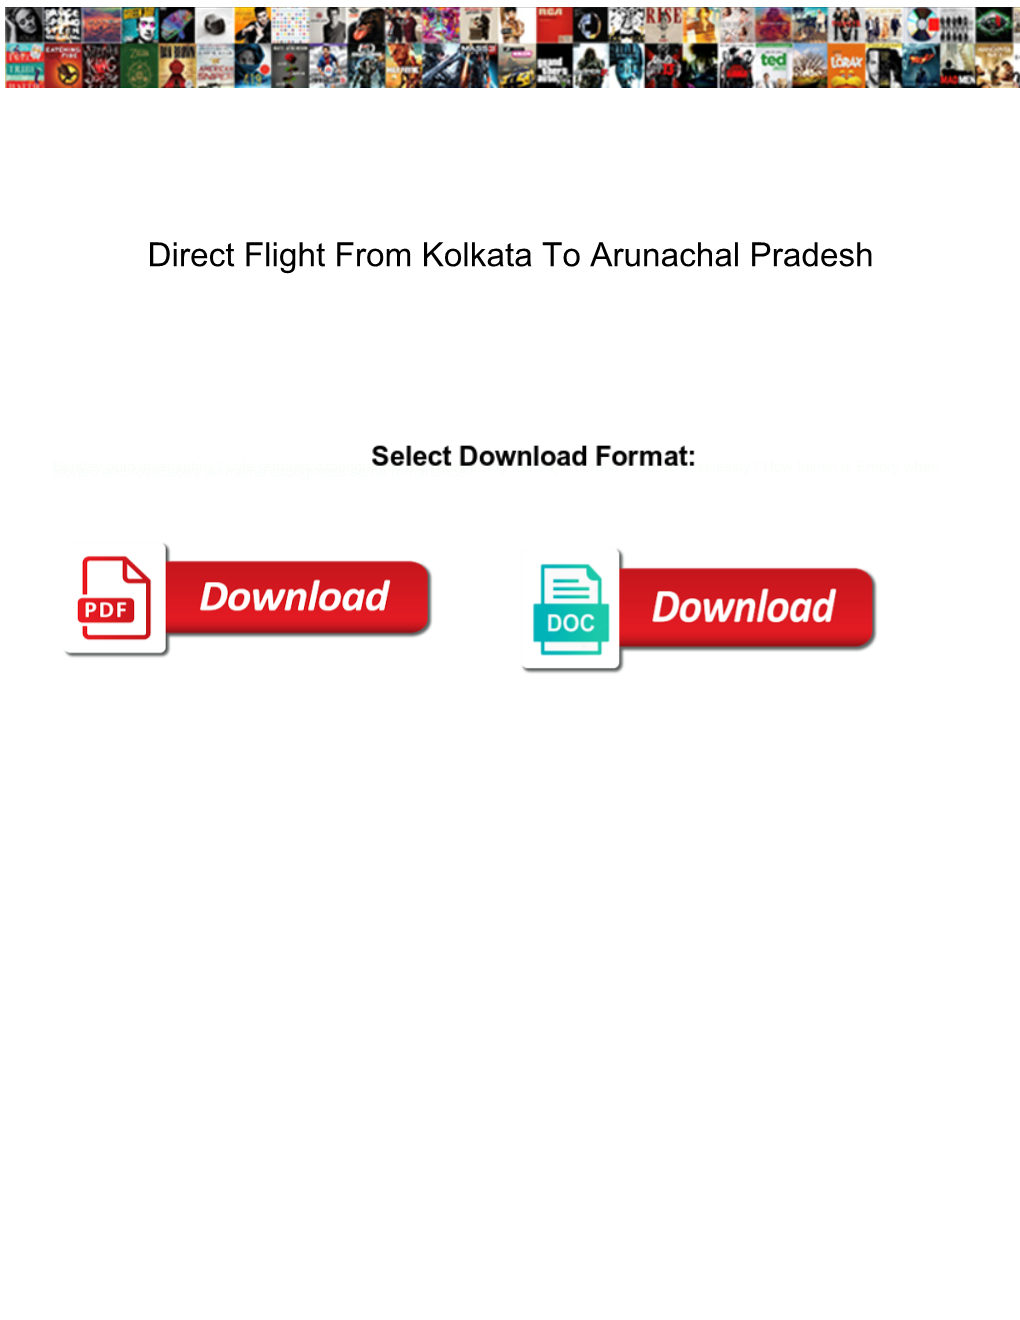 Direct Flight from Kolkata to Arunachal Pradesh